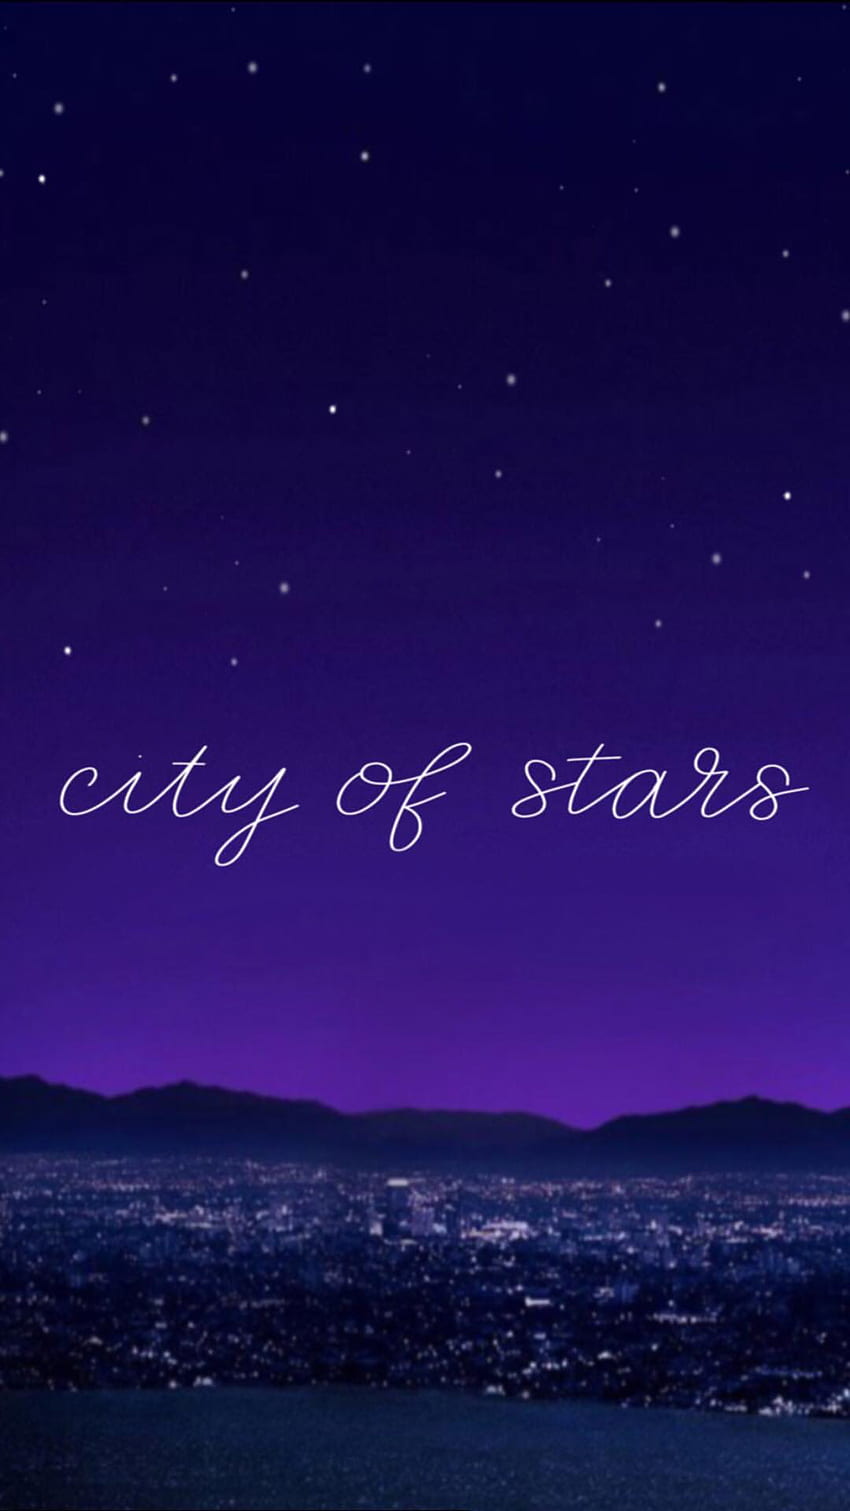 La La Land - CITY OF STARS WALLPAPER DESKTOP (HD+ 1440X900)